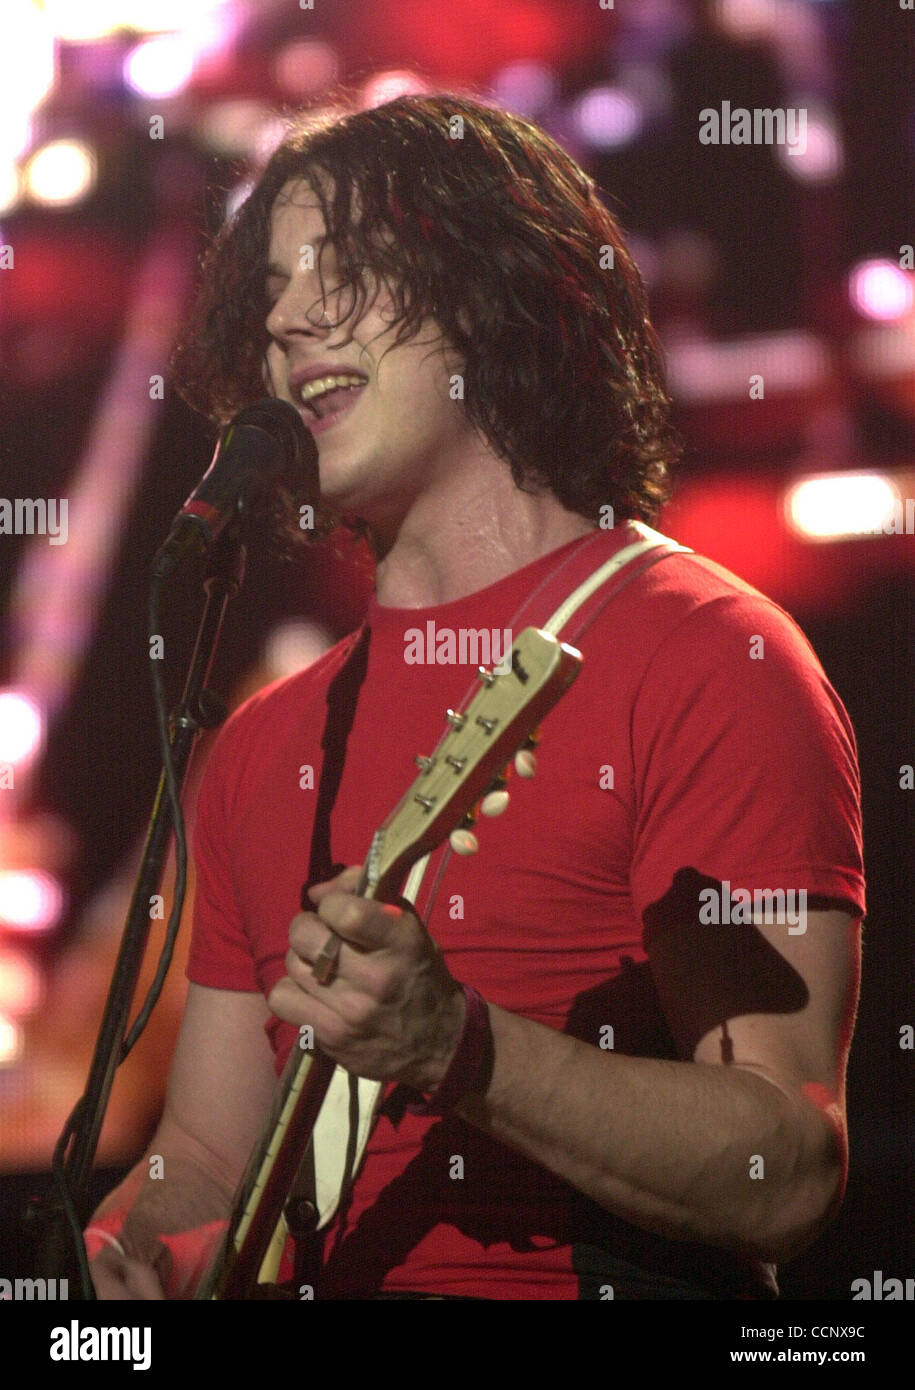 Jun 14, 2003; Irvine, CA, USA; Singer guitar player JACK WHITE of 'The White Stripes' at the KROQ Weenie Roast 2003 held at Verison Wireless Amphitheater. Stock Photo